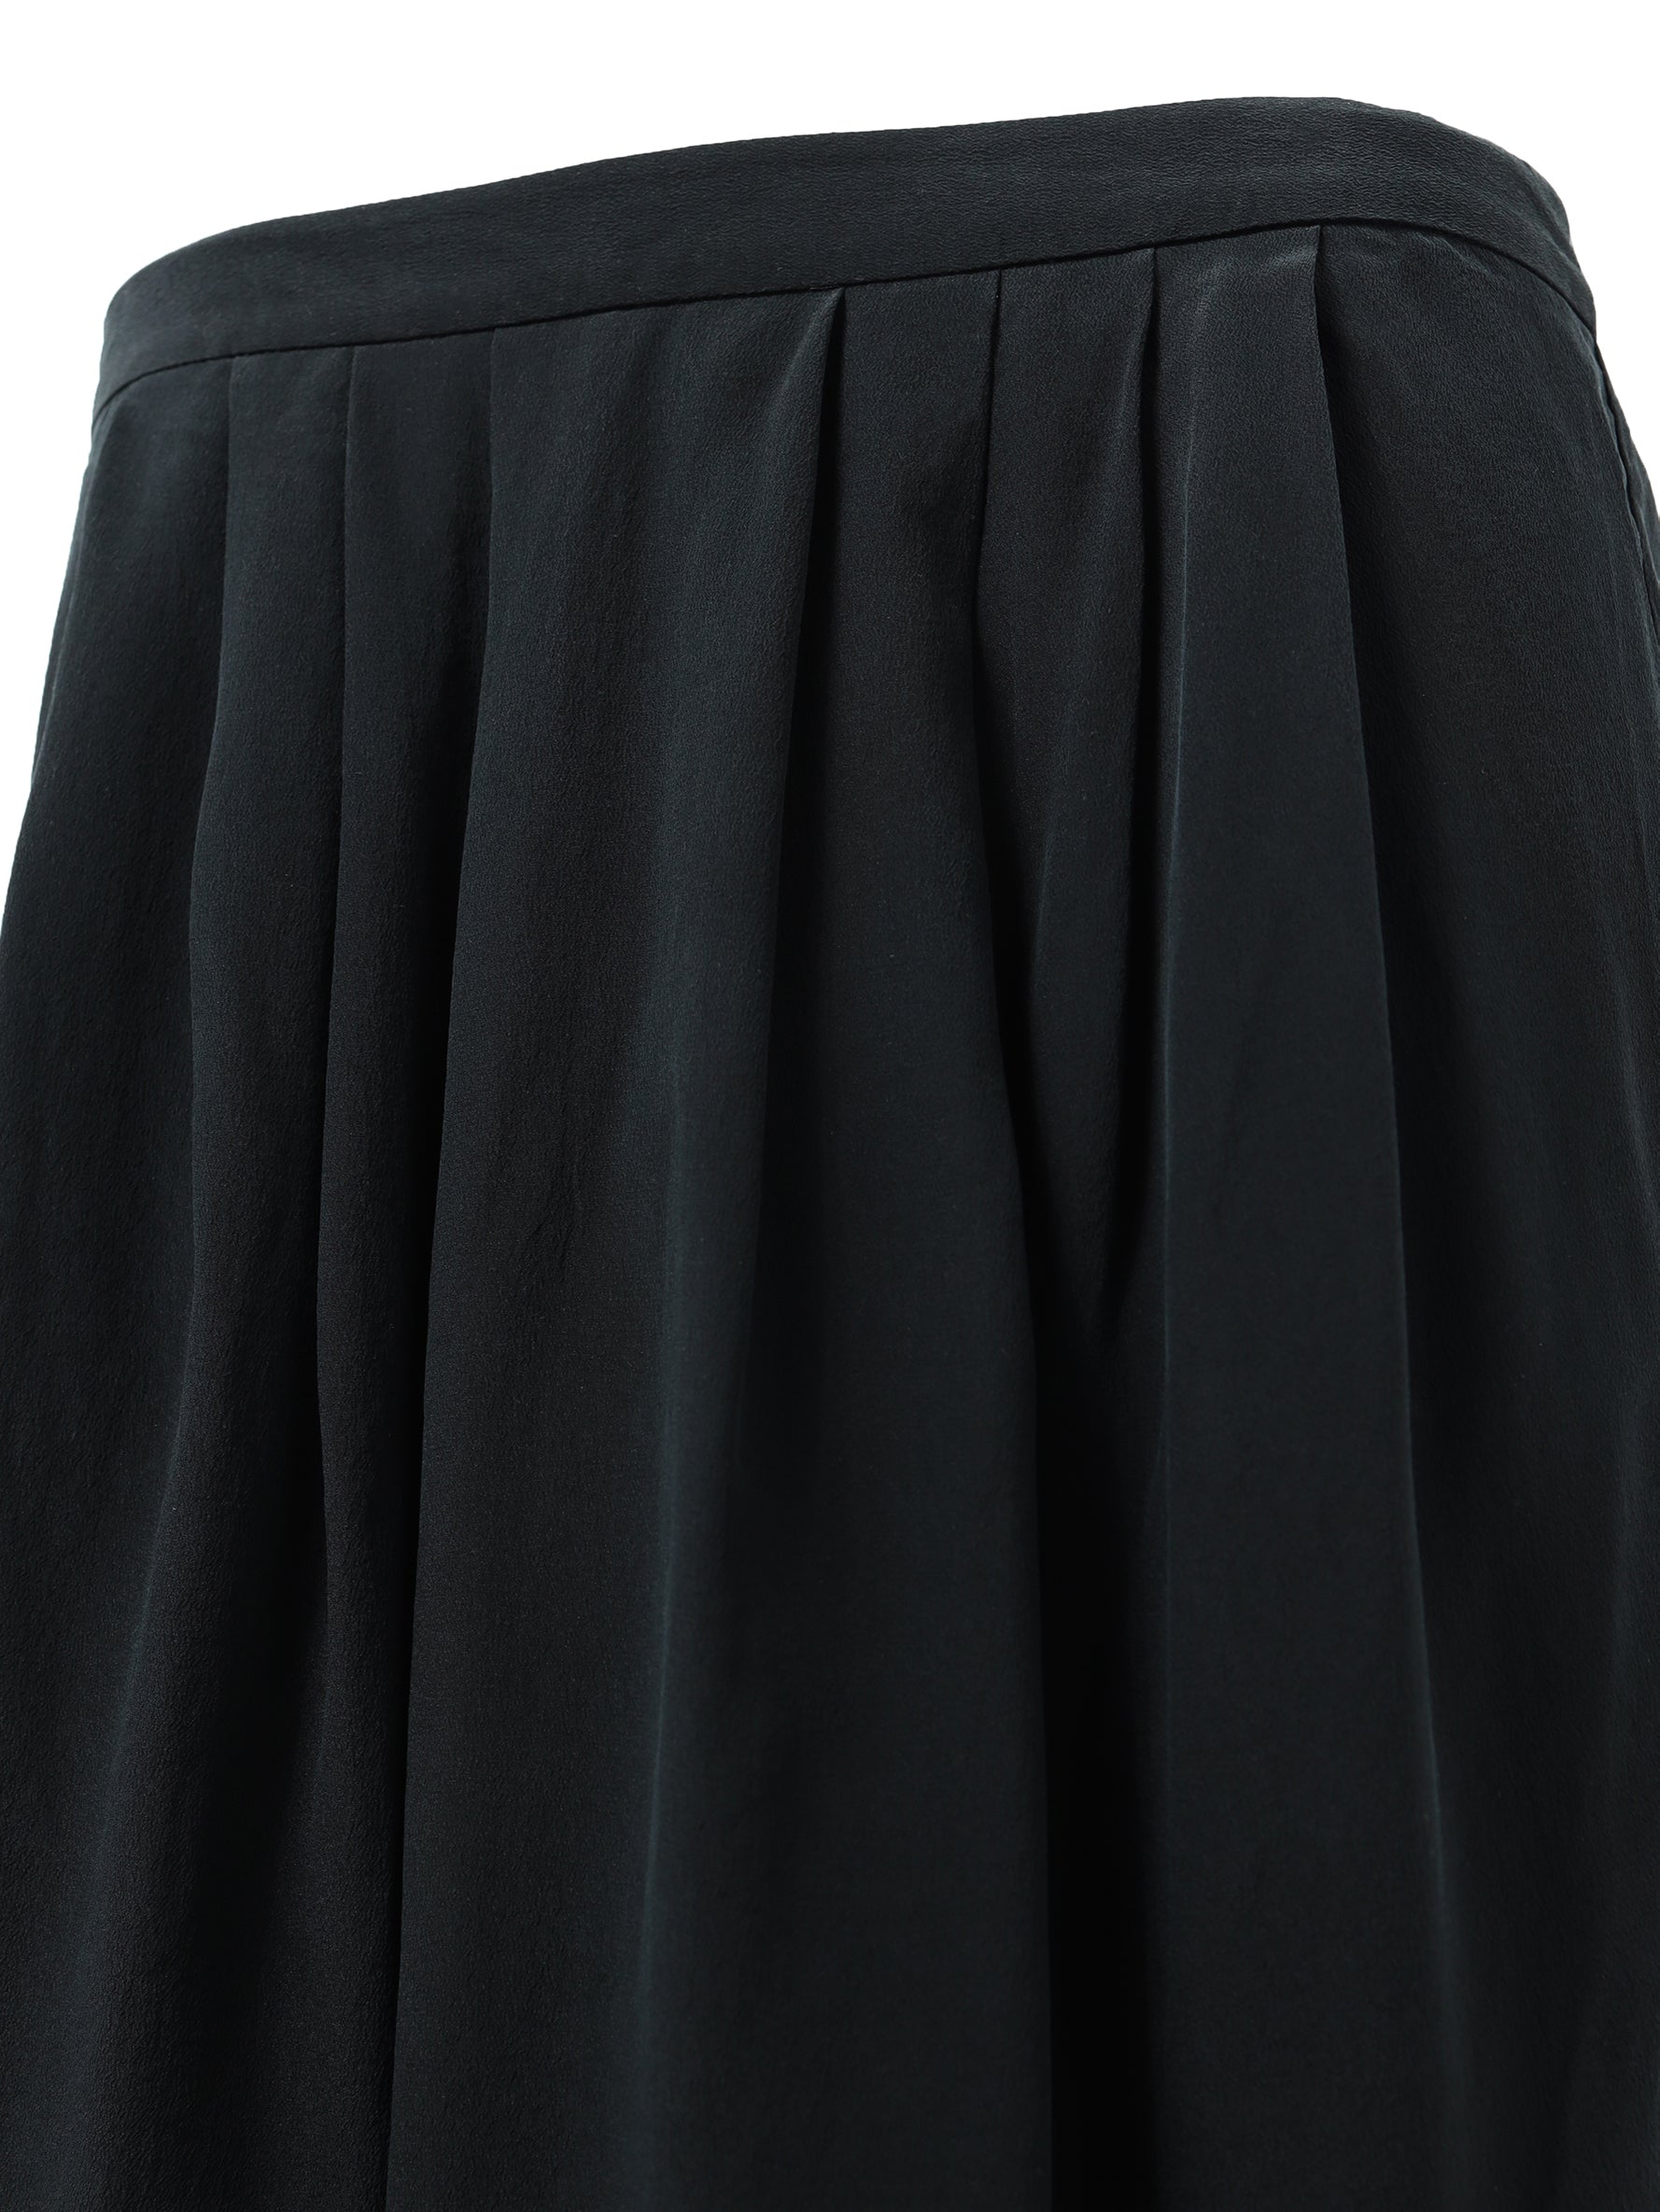 Black Double Layered Skirt